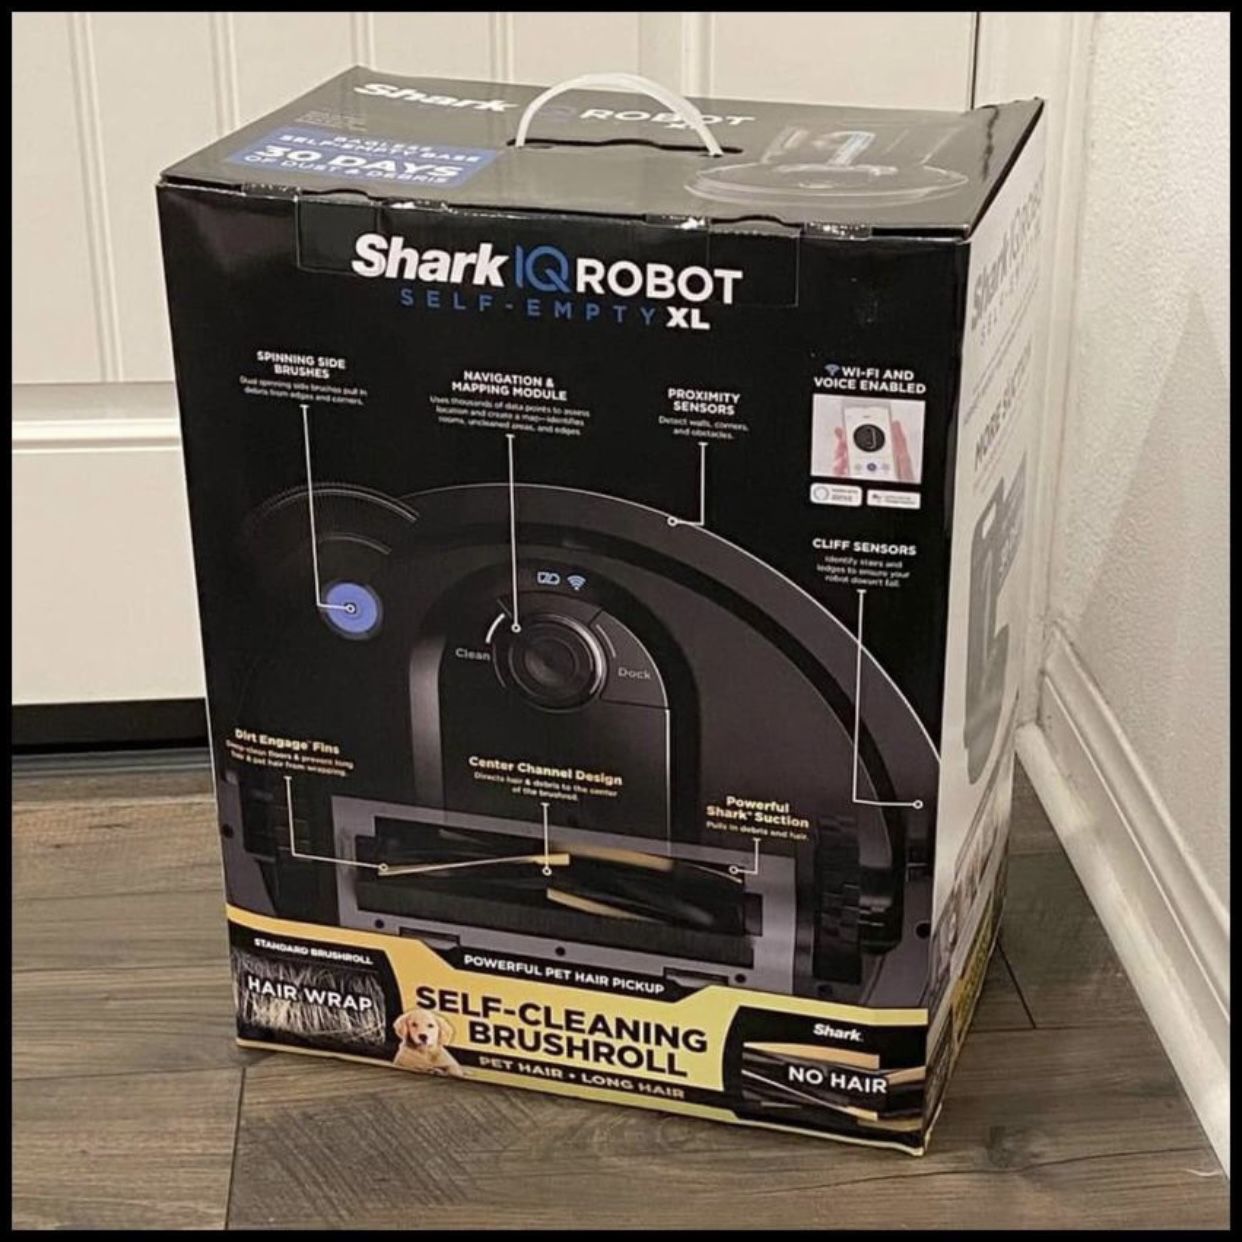 NEW Shark IQ Robot w XL Self Emptying Base. Smart Vacuum, Wifi, App, Home Mapping R101AE R1001AE